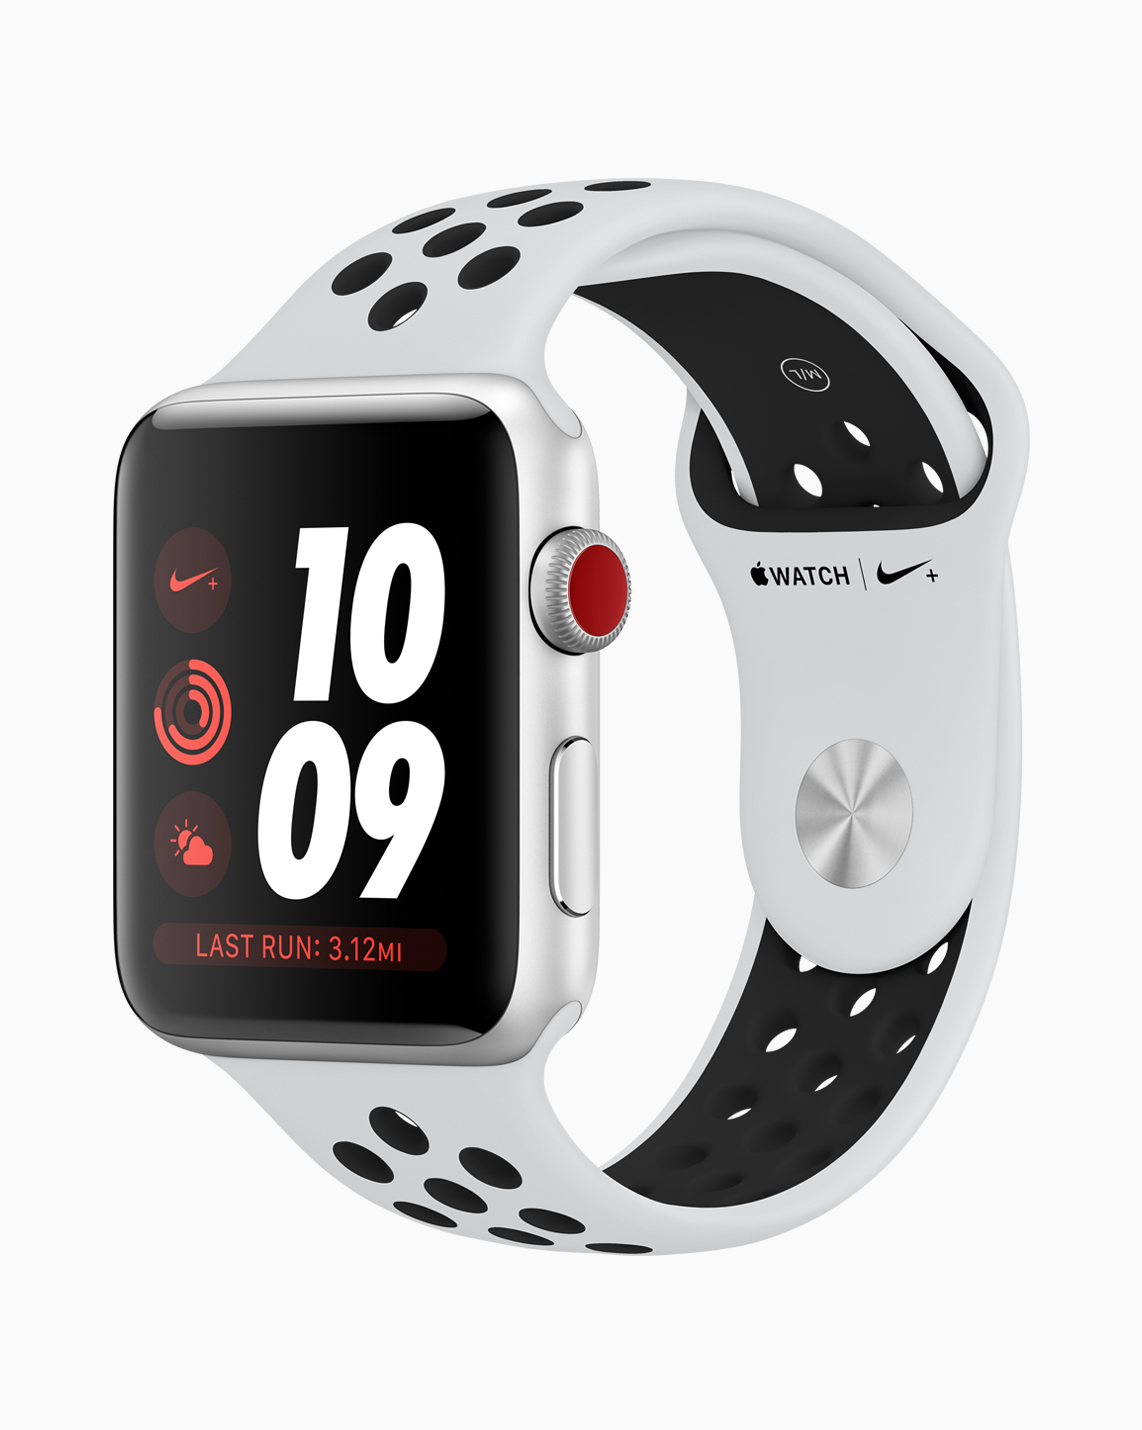 Nike+ Apple Watch Series 3: Is it Waterproof?